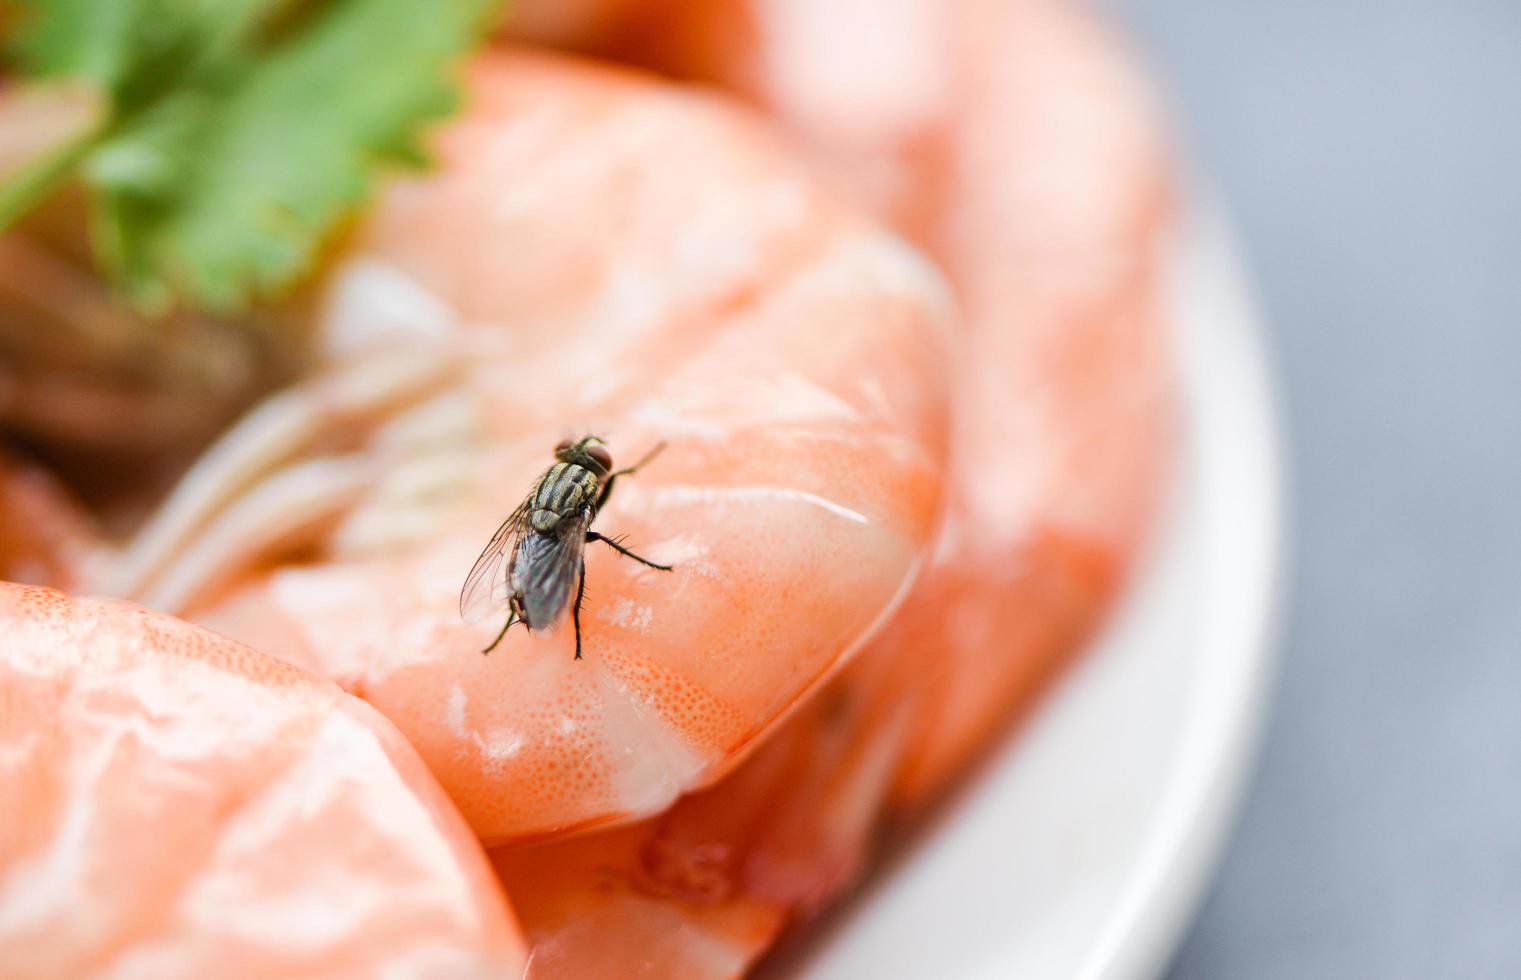 house flies on shrimp the dirty food contamination hygiene concept - fly on food photo